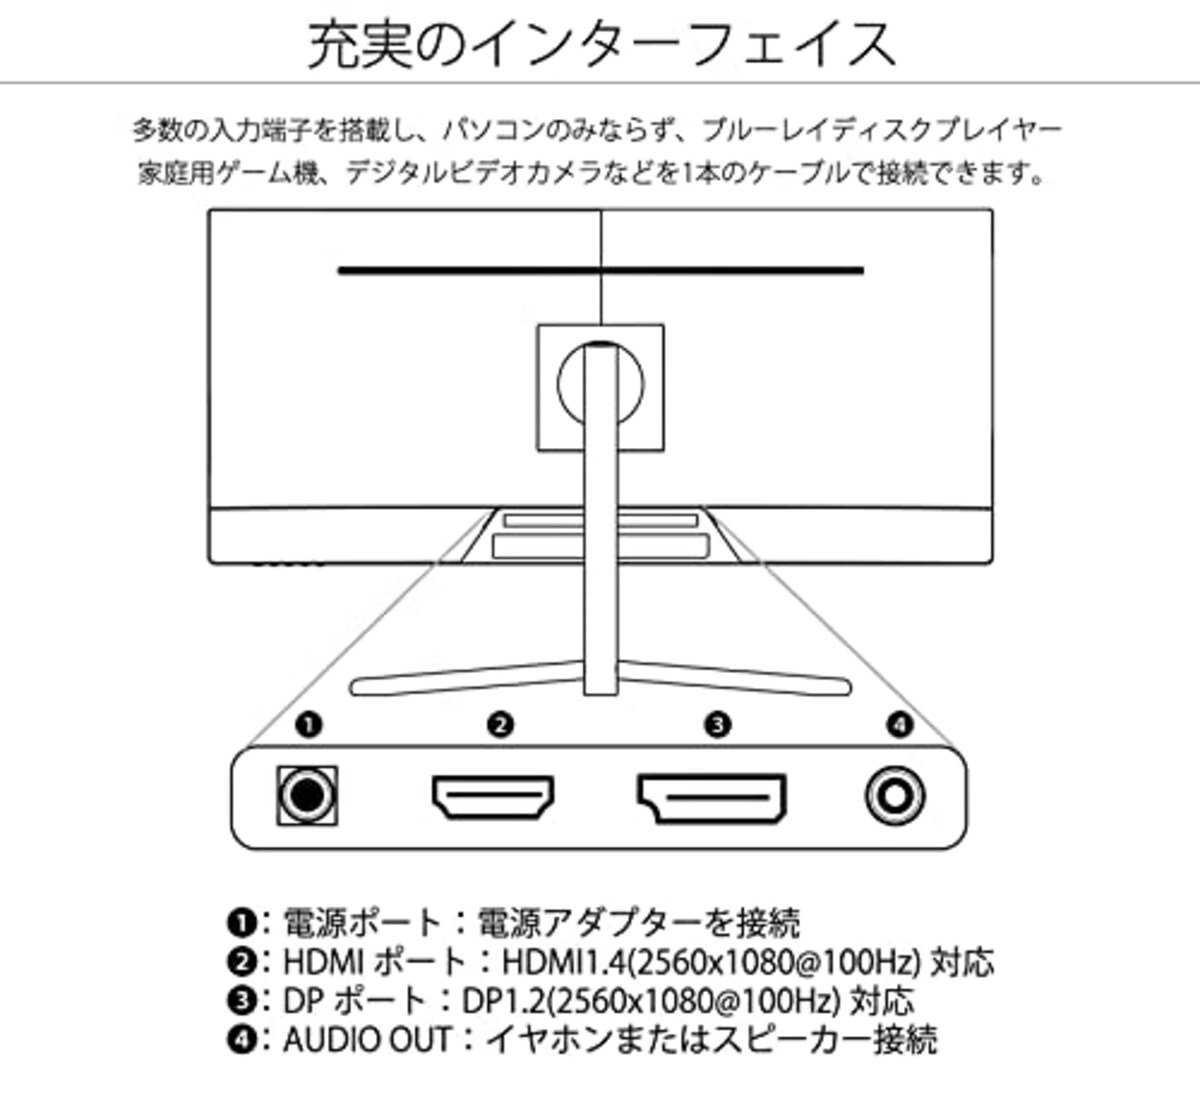  JAPANNEXT 30インチ ワイドFHD(2560 x 1080) 液晶モニター JN-V30100WFHD HDMI DP画像5 